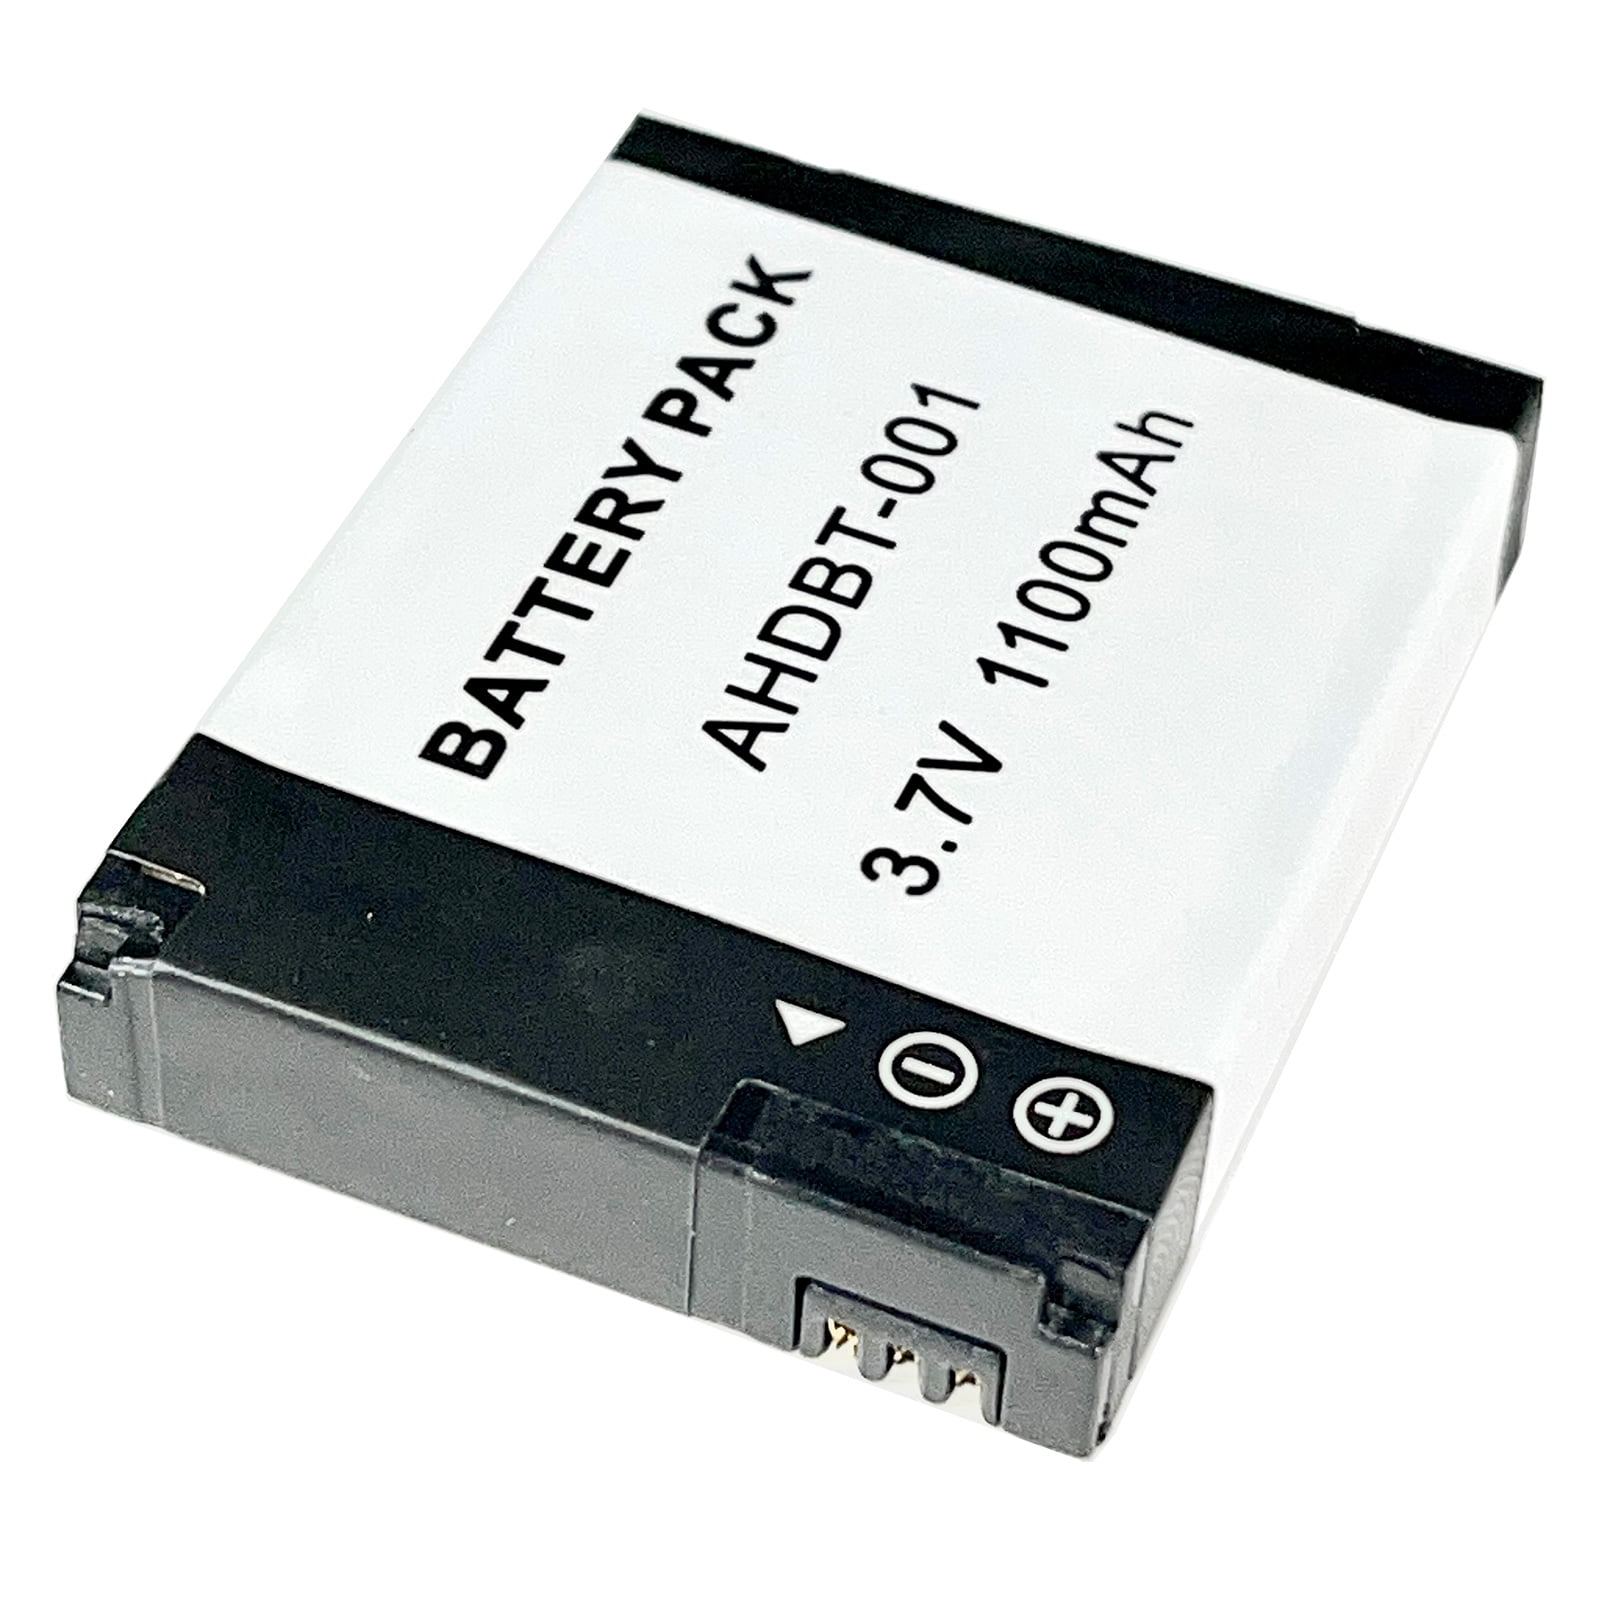 BATTERY x 2 for GoPro Hero HD HERO2 Pro AHDBT-001 AHDBT-002 Camera TWO BATTERIES 